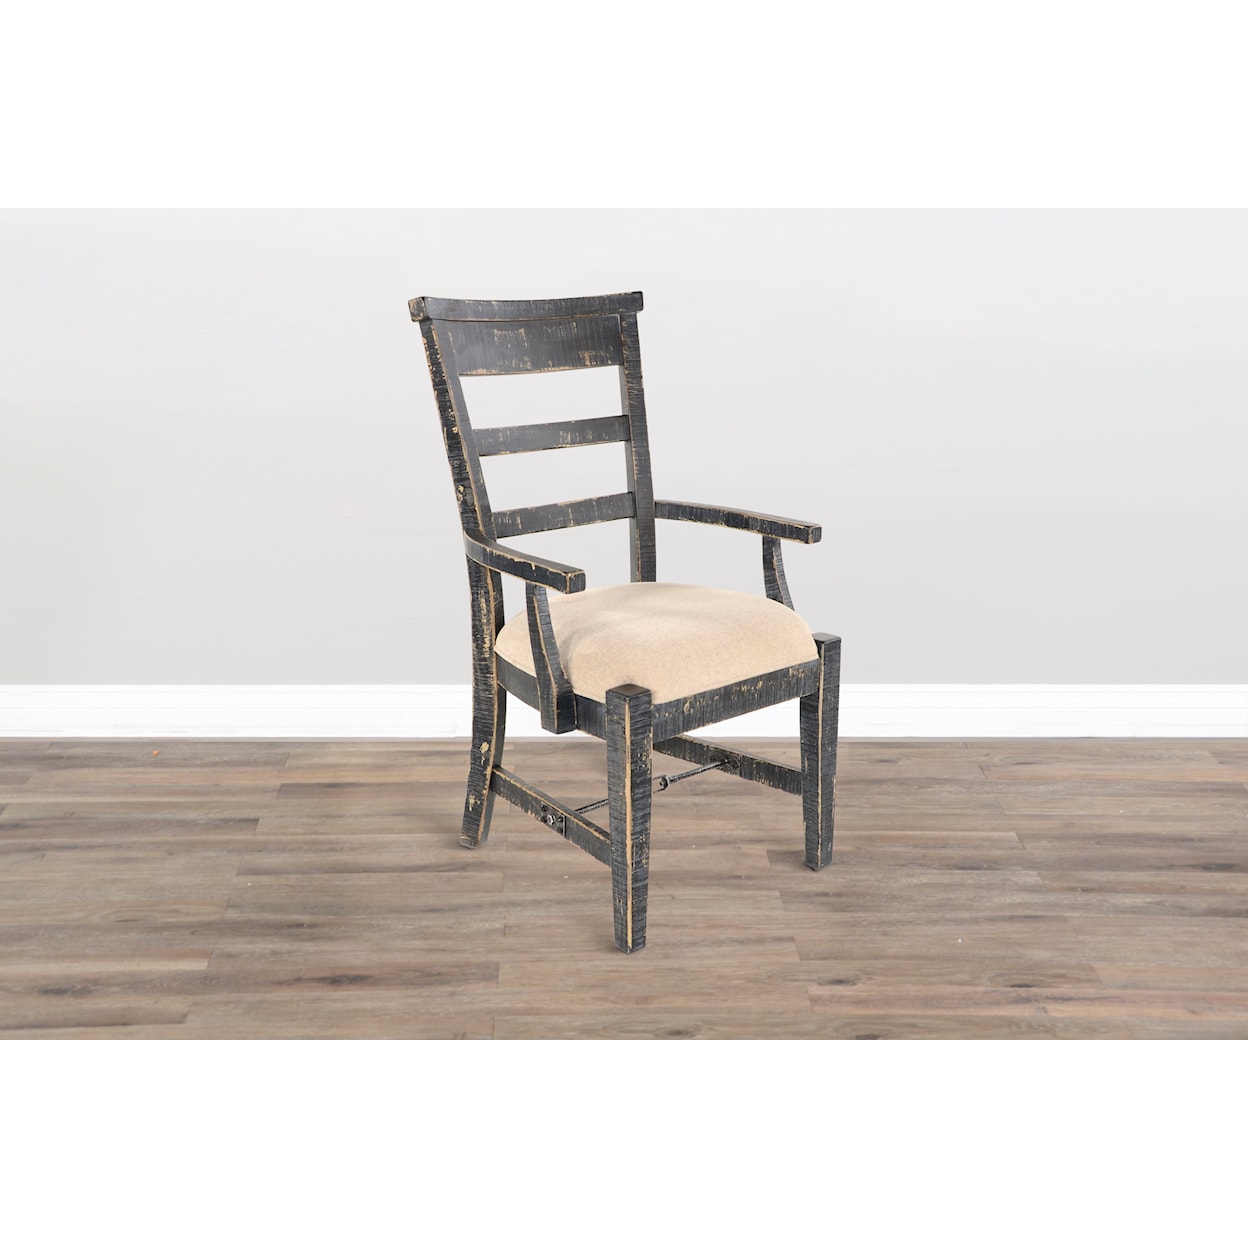 Sunny Designs Marina Black Sand Arm Chair, Cushion Seat